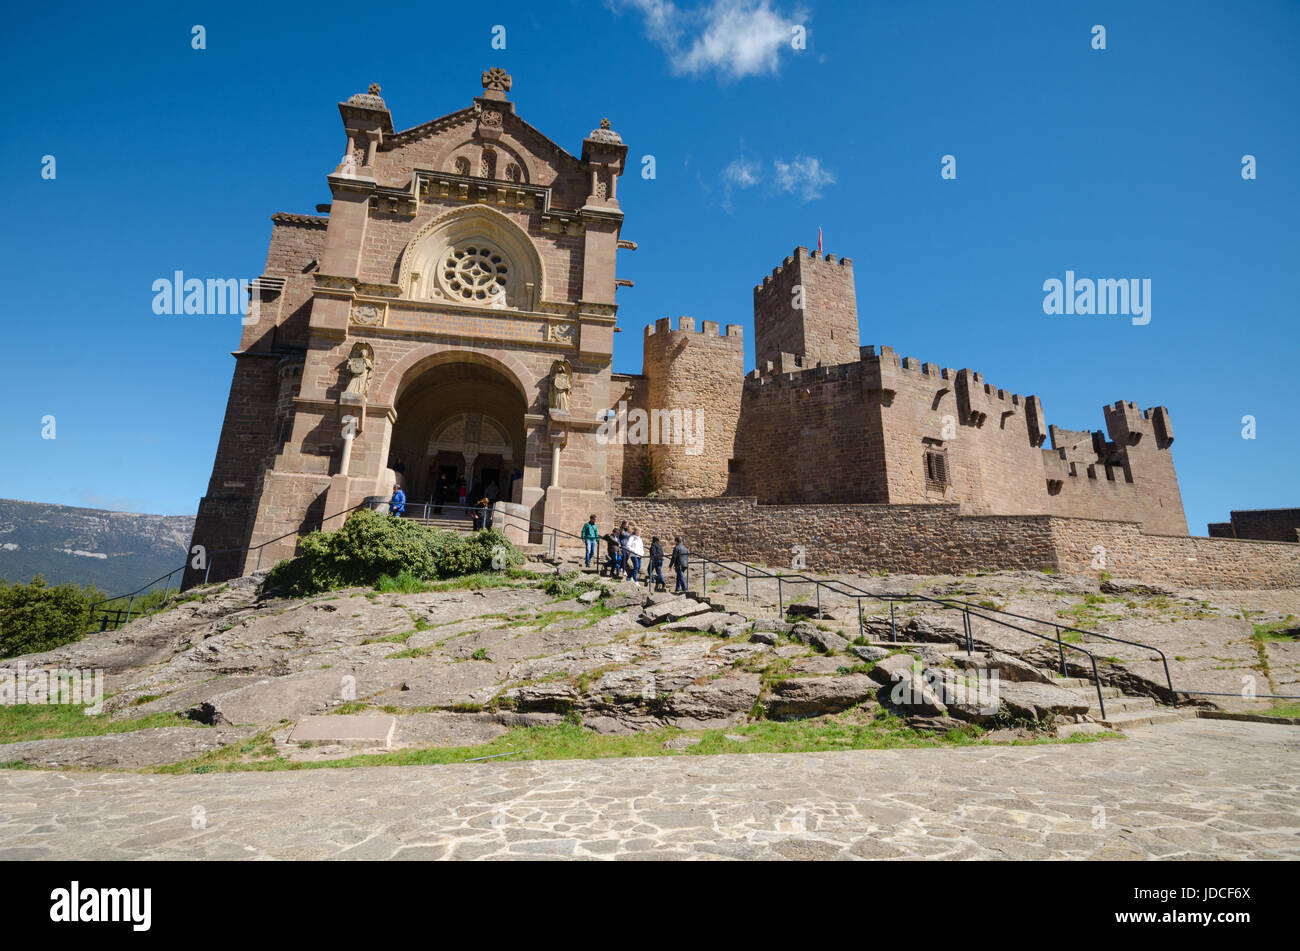 Javier, Spain - April 4, 2015: Tourist visiting famous Javier Castle on april 4, 2015 in Navarra, Spain. Stock Photo